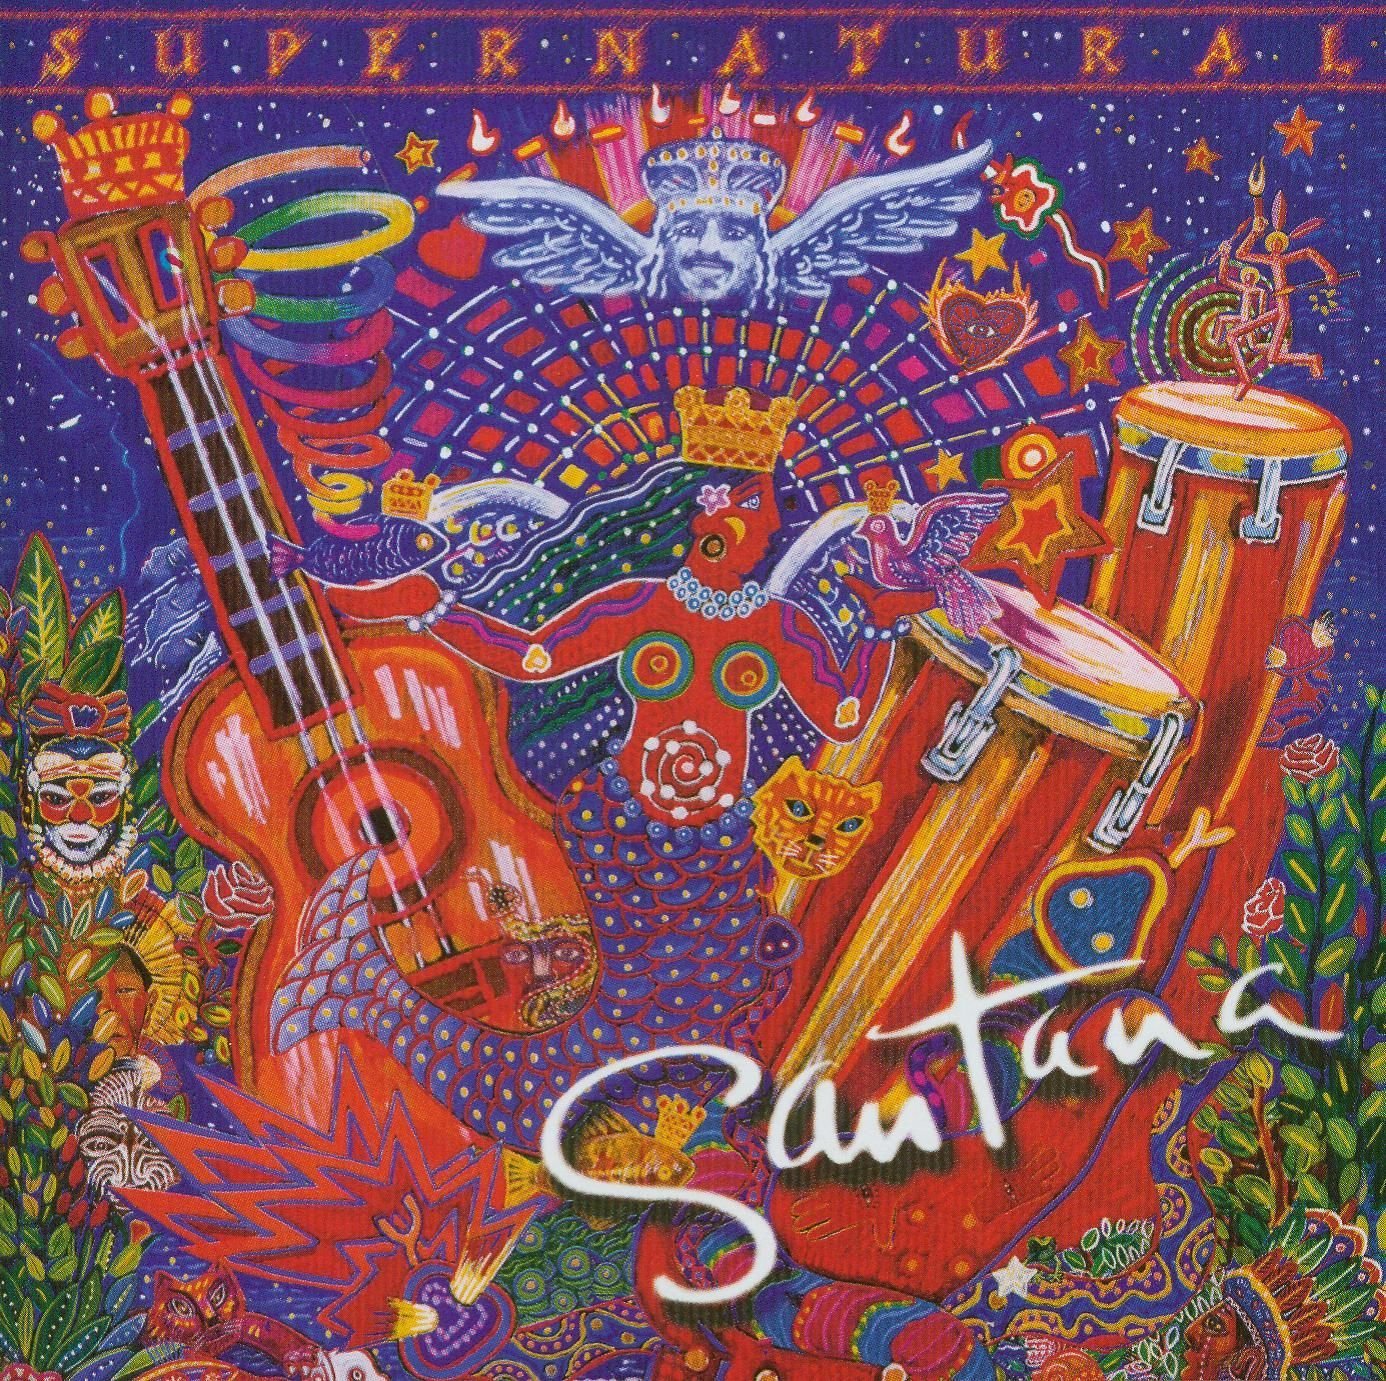 Santana - Supernatural (1999)